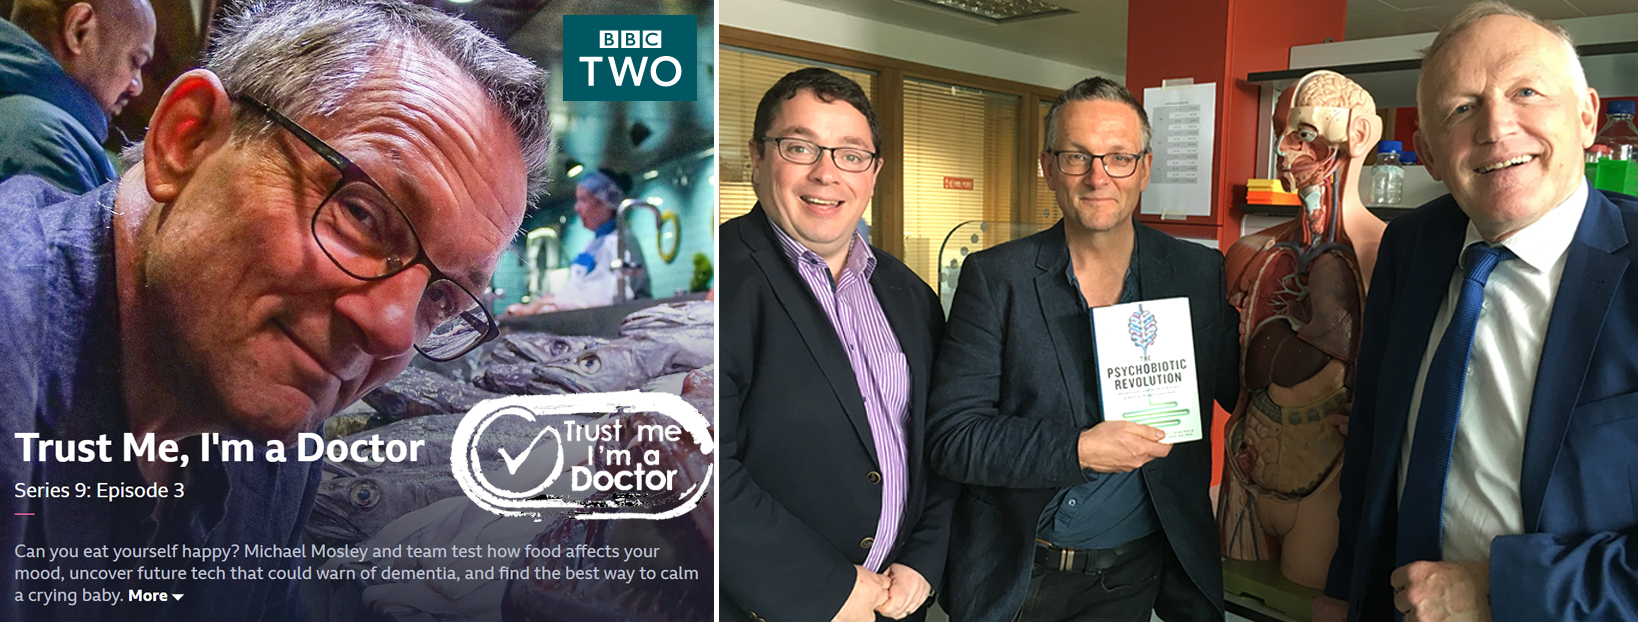 John Cryan, Ted Dinan & team on 'Trust me I’m a Doctor'